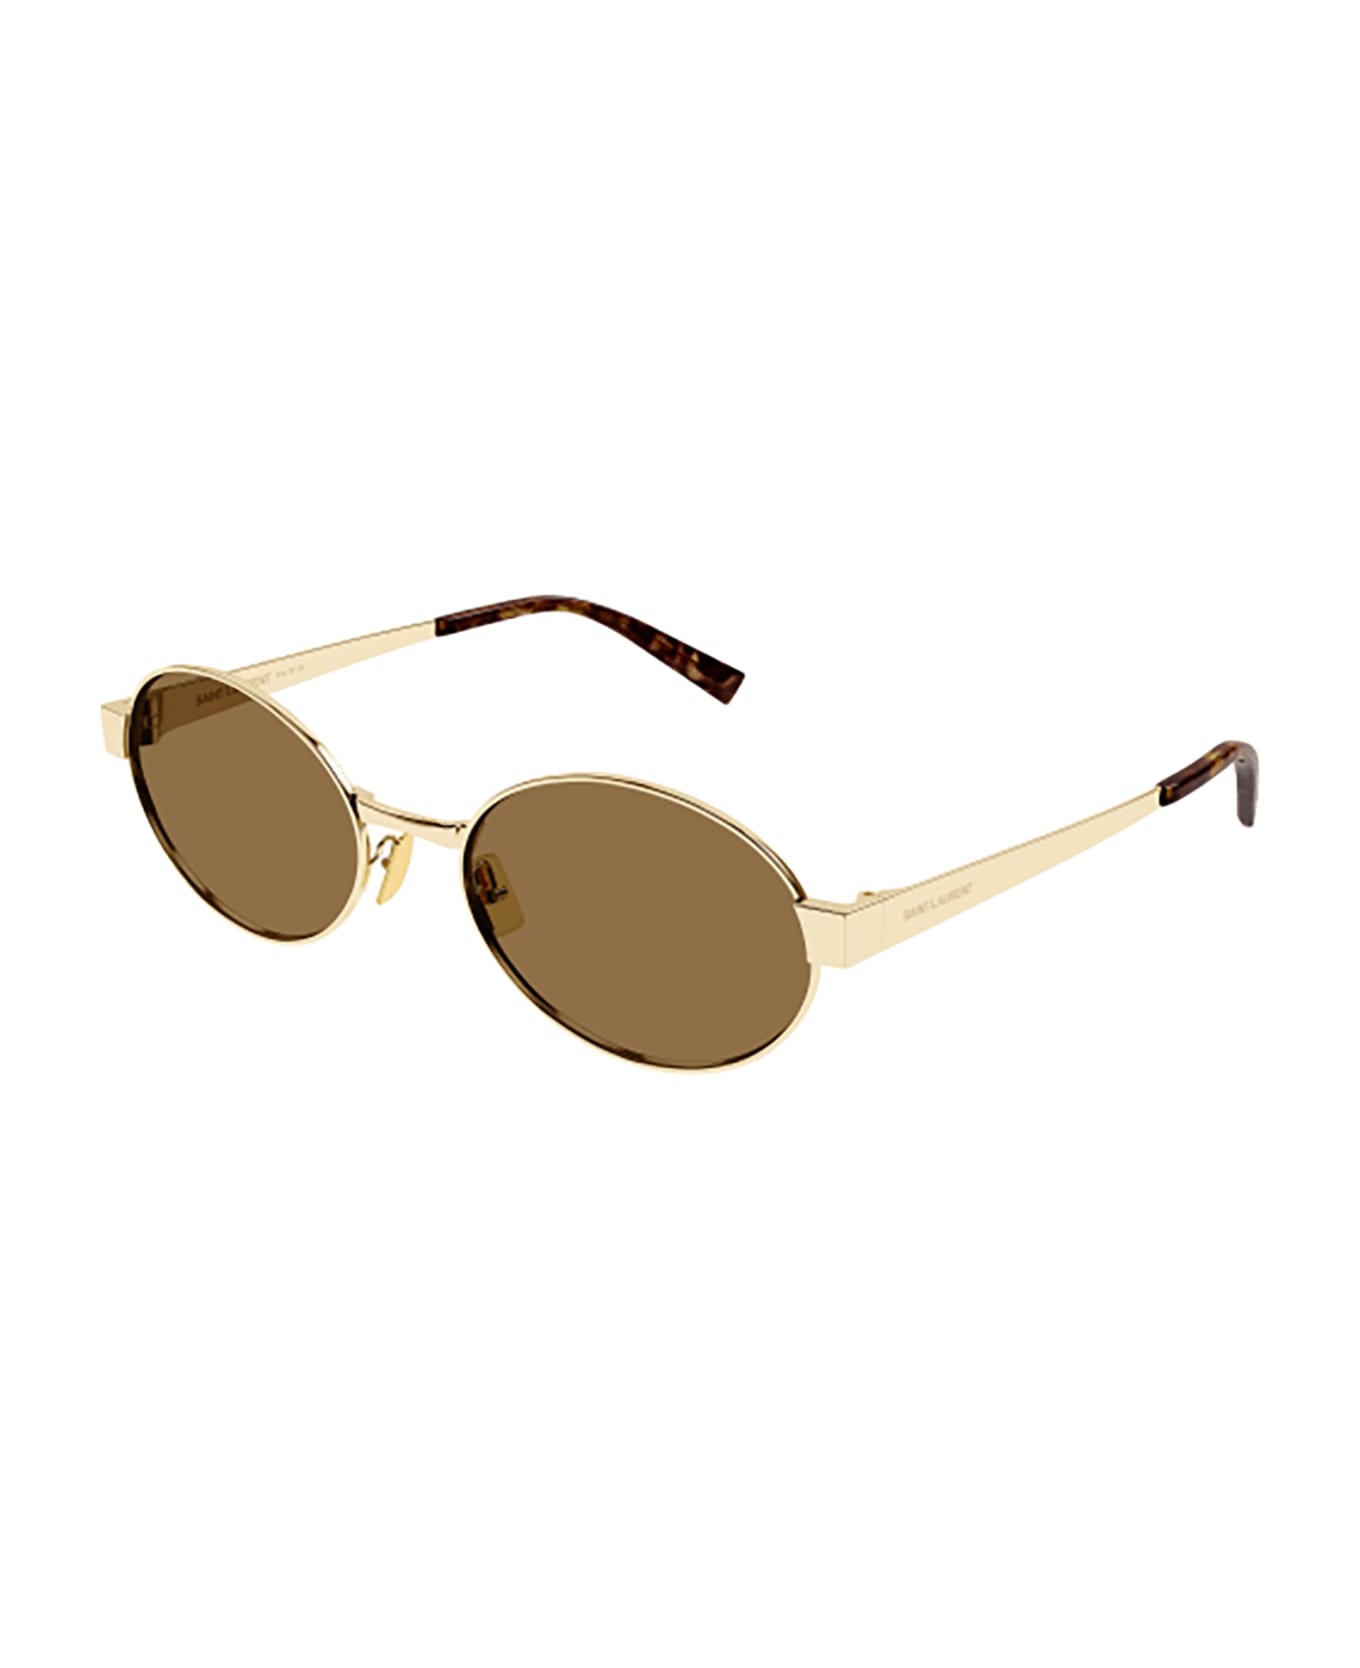 Saint Laurent Eyewear Sl 692 Sunglasses - 004 gold gold brown サングラス